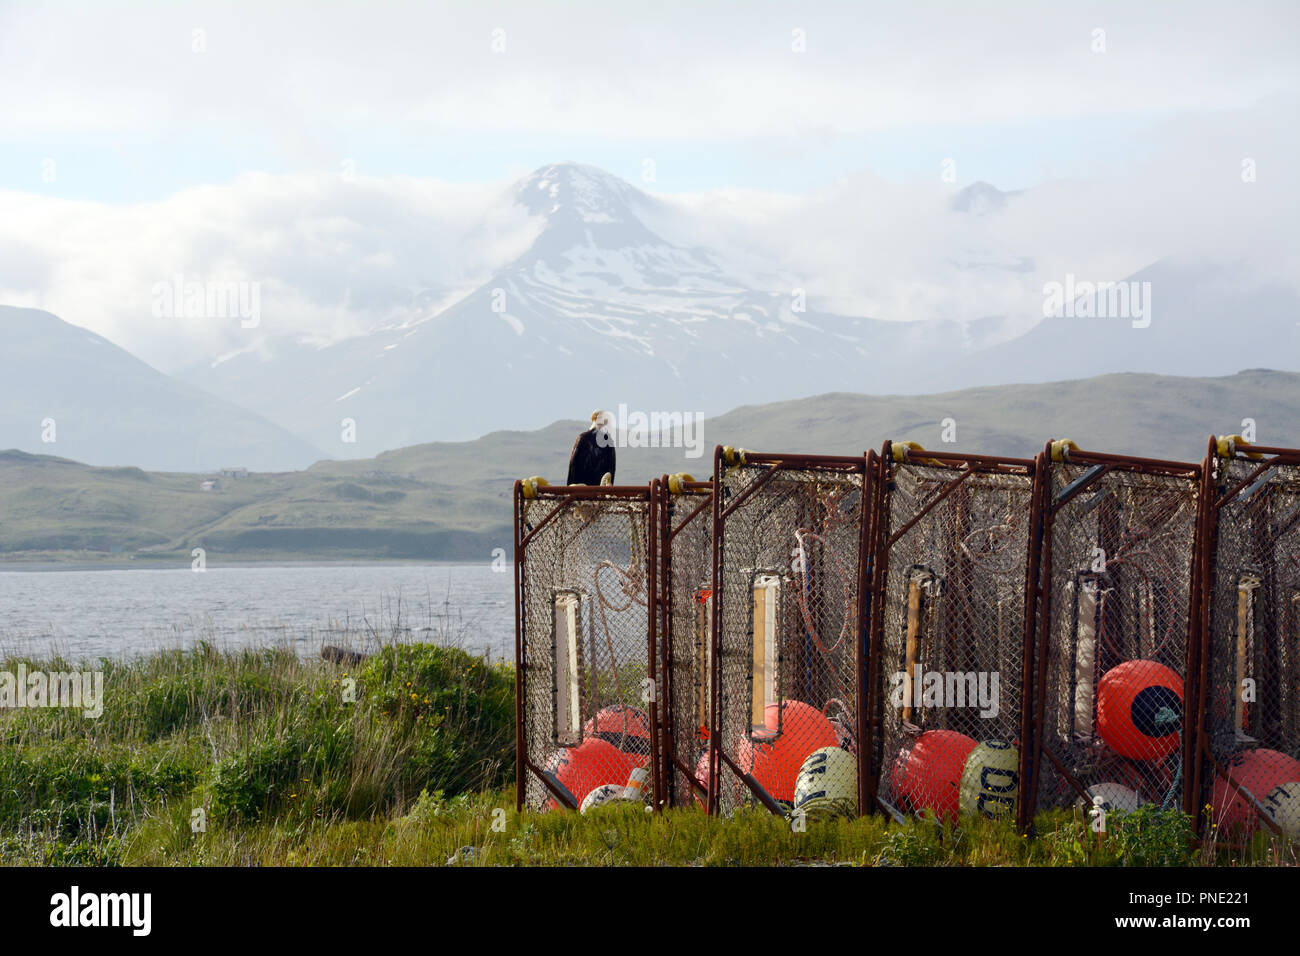 A bald eagle perched on a crab trap beside the Bering Sea in Dutch Harbor, Amaknak Island, Unalaska, Alaska, United States. Stock Photo